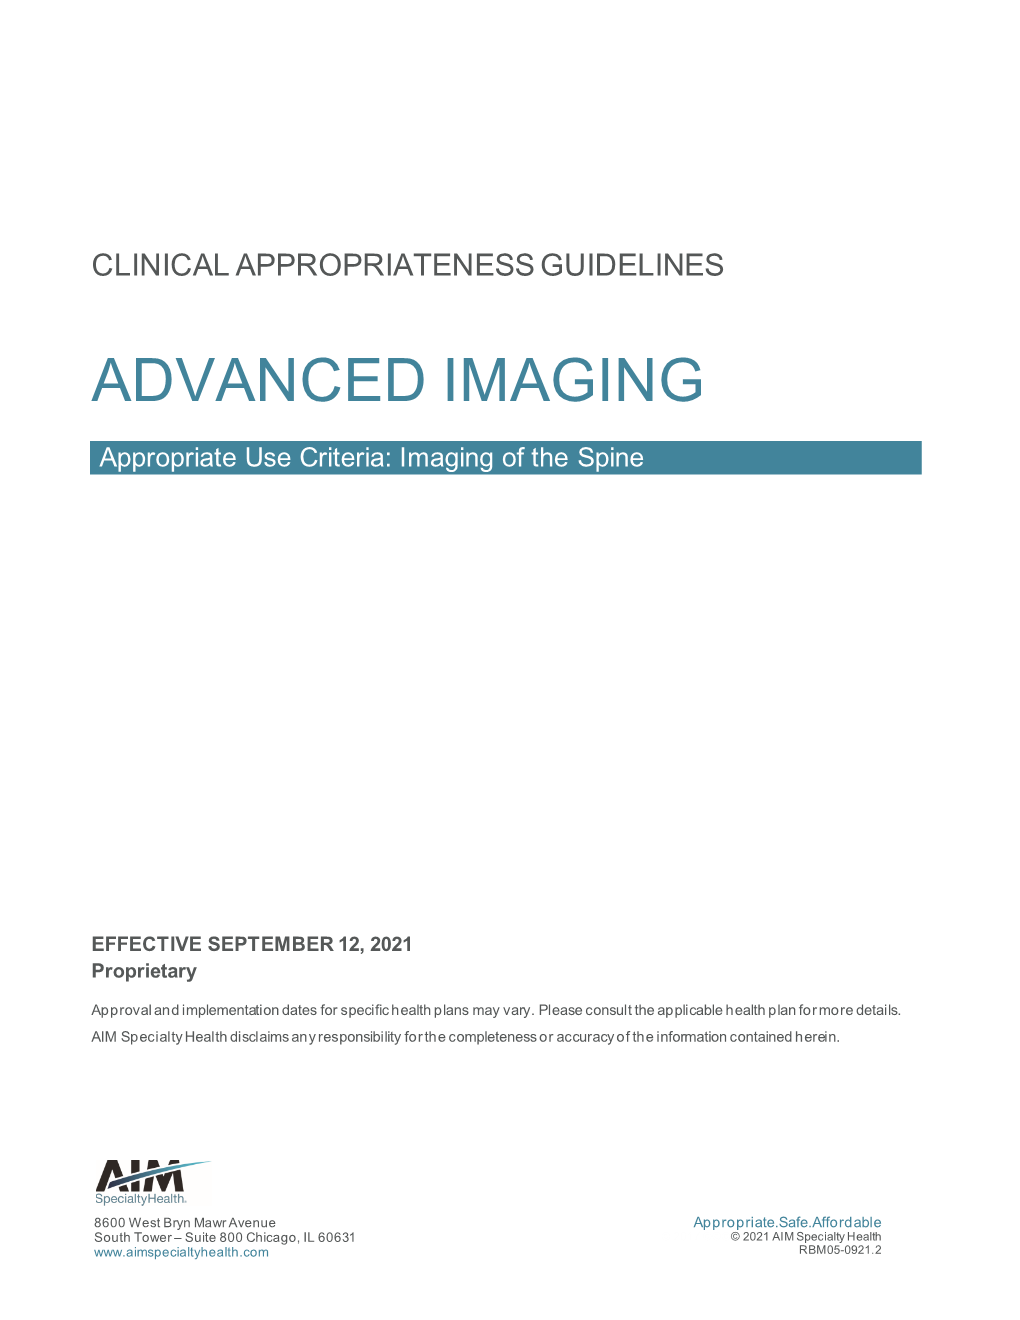 Coming Soon Spine Imaging Guidelines Effective September 12, 2021